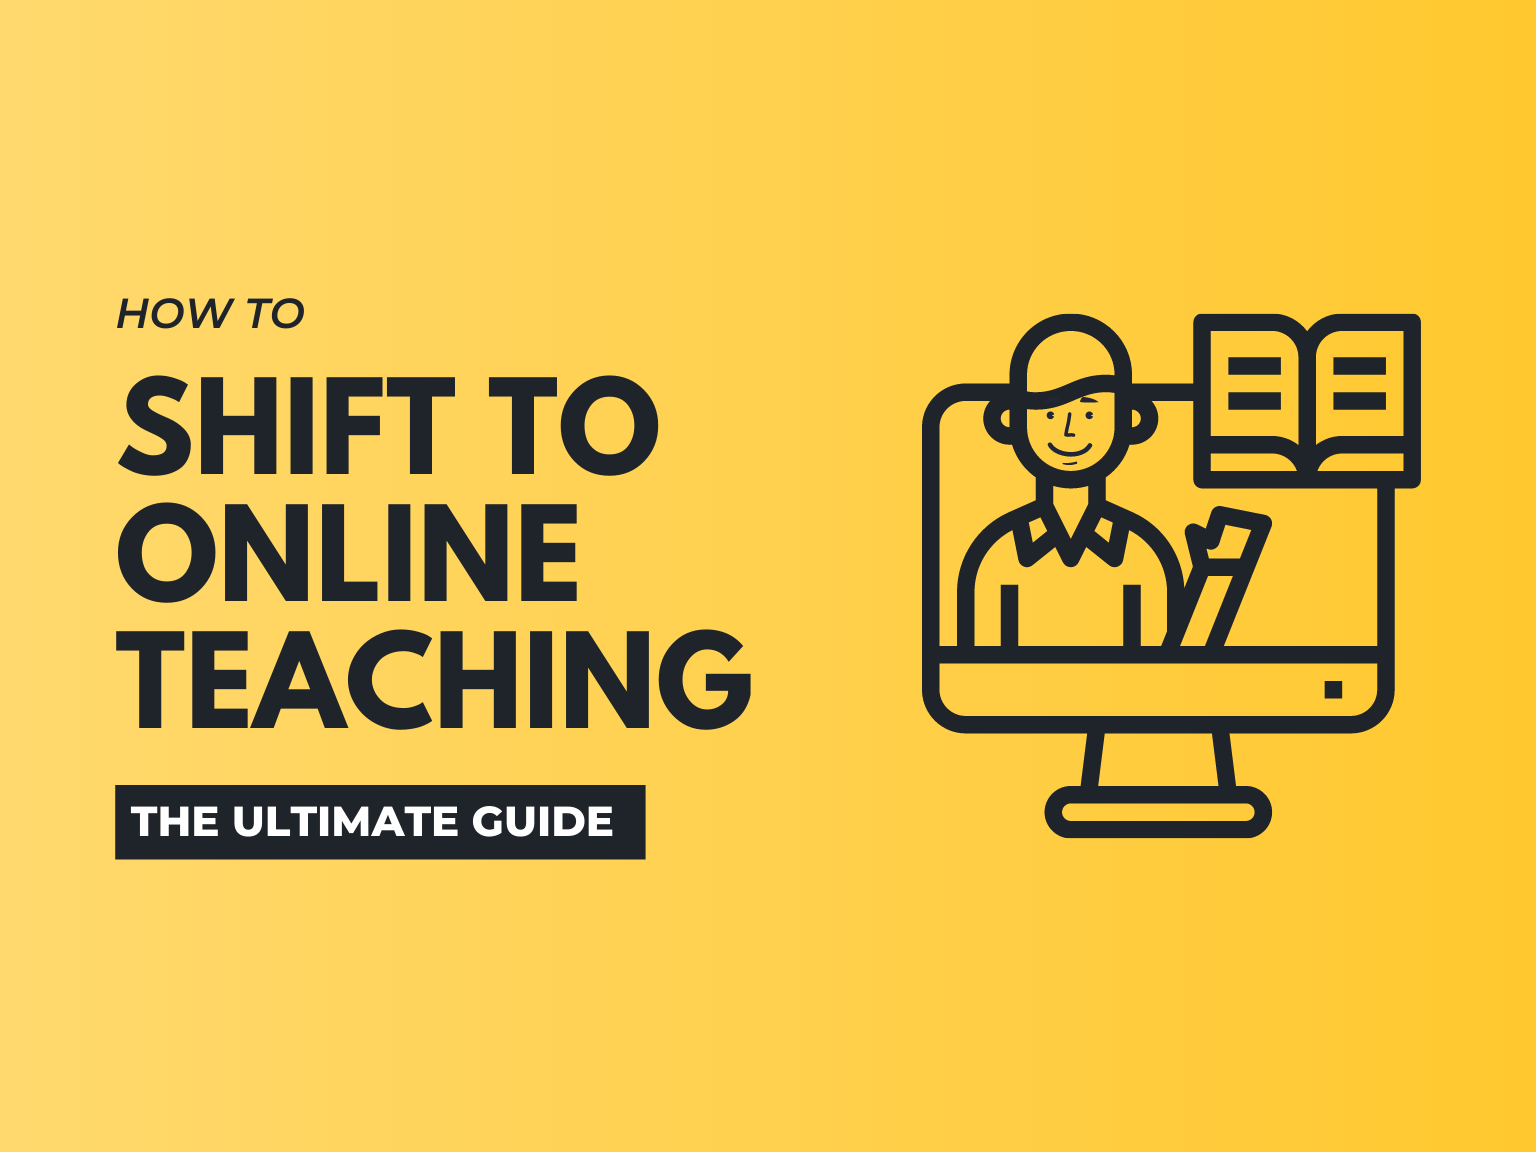 Shift to online teaching